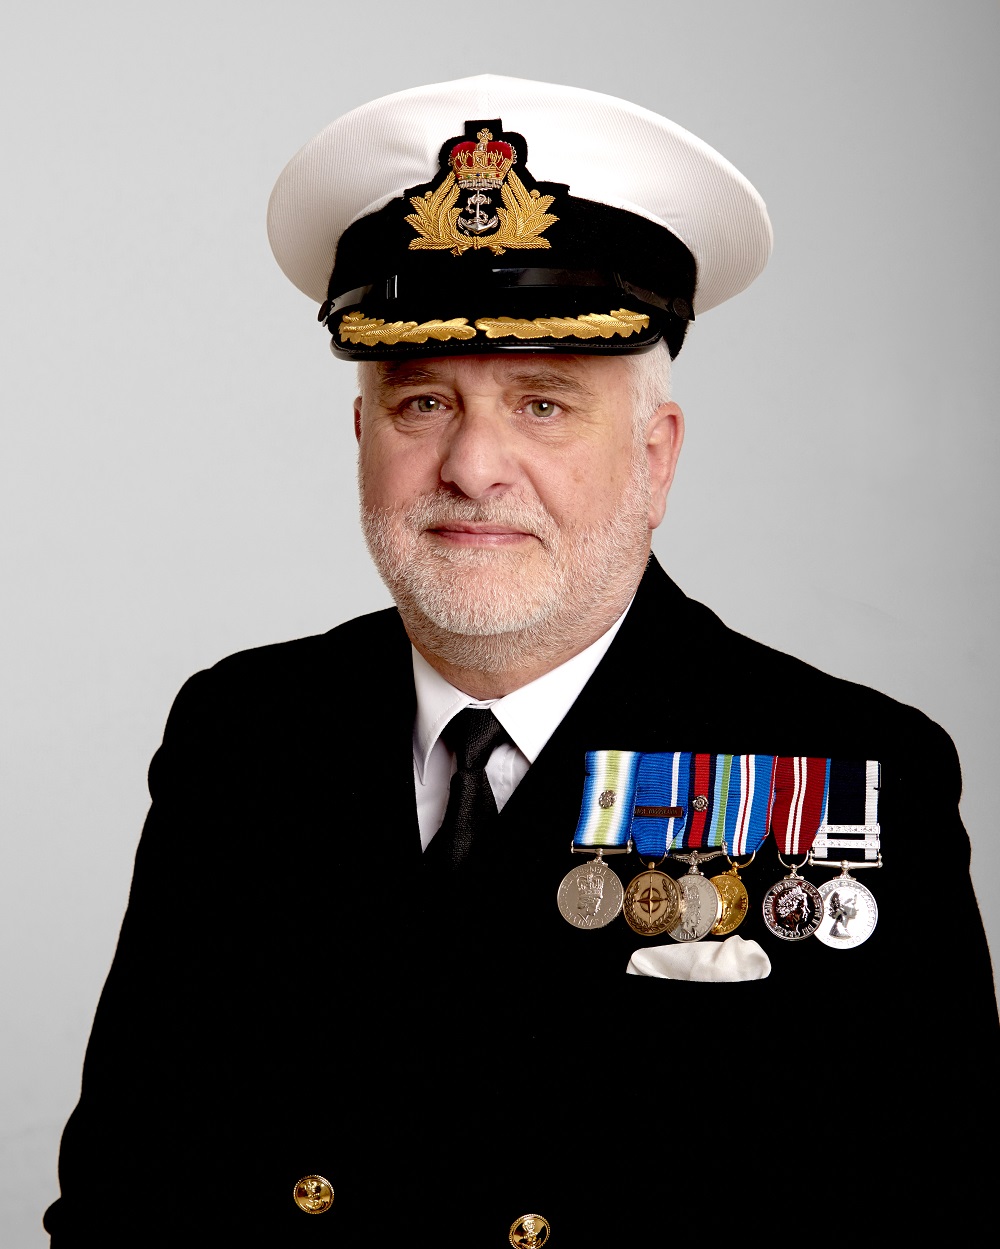 Former naval officer recalls lucky escape in Falklands